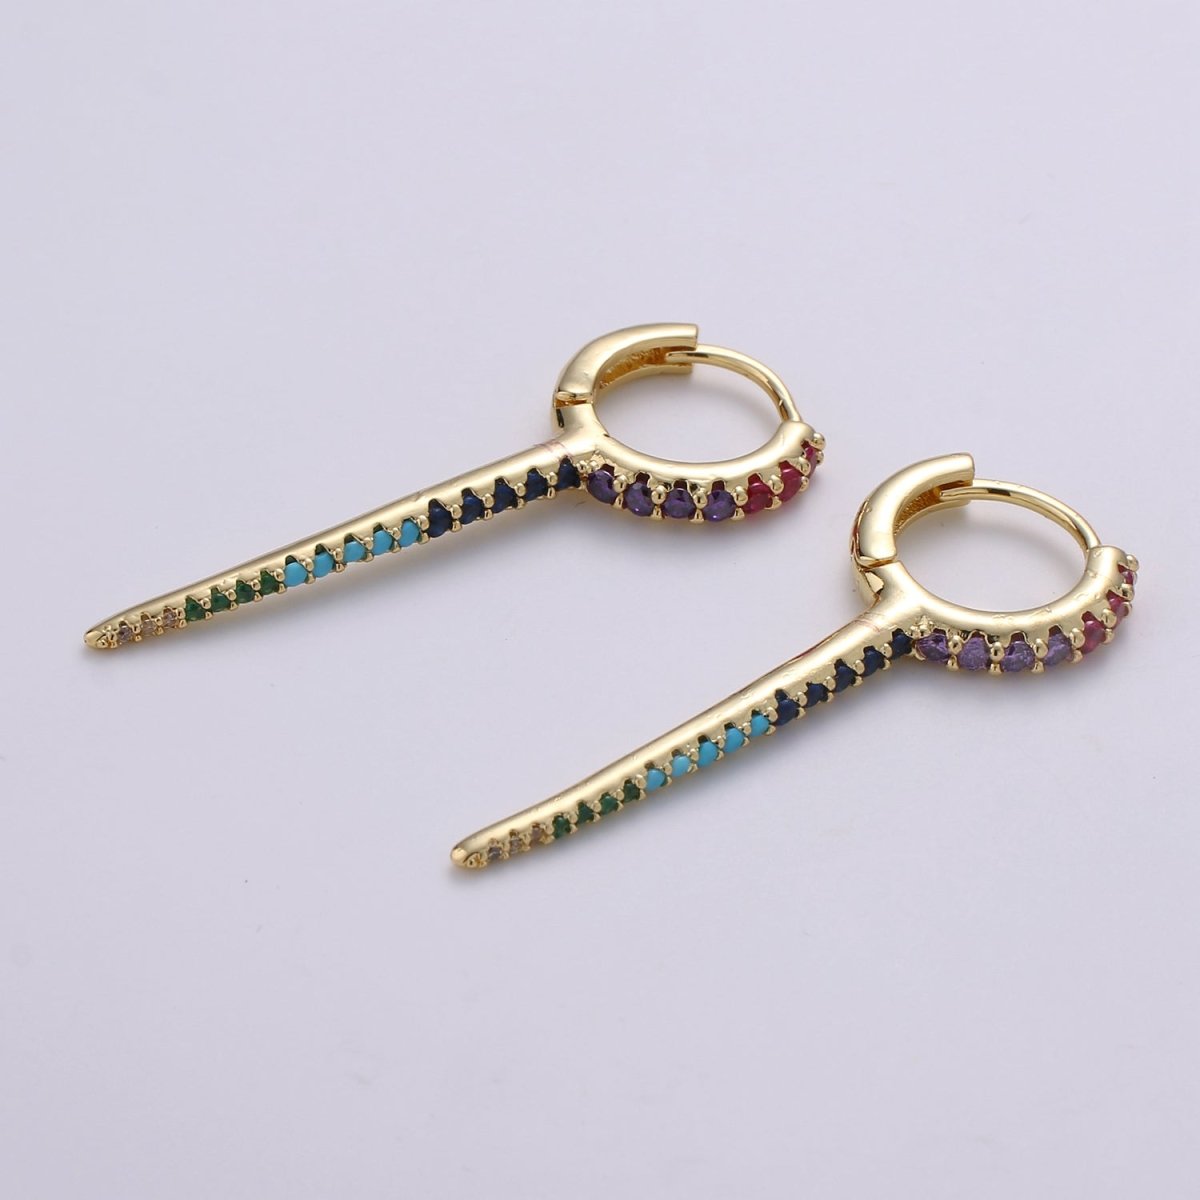 Dainty Huggie earrings, spike earrings, Multi Color hoop earrings, Long Gold Micro Pave Spike Earring Minimal Jewelry Q-165 - Q-171 - DLUXCA